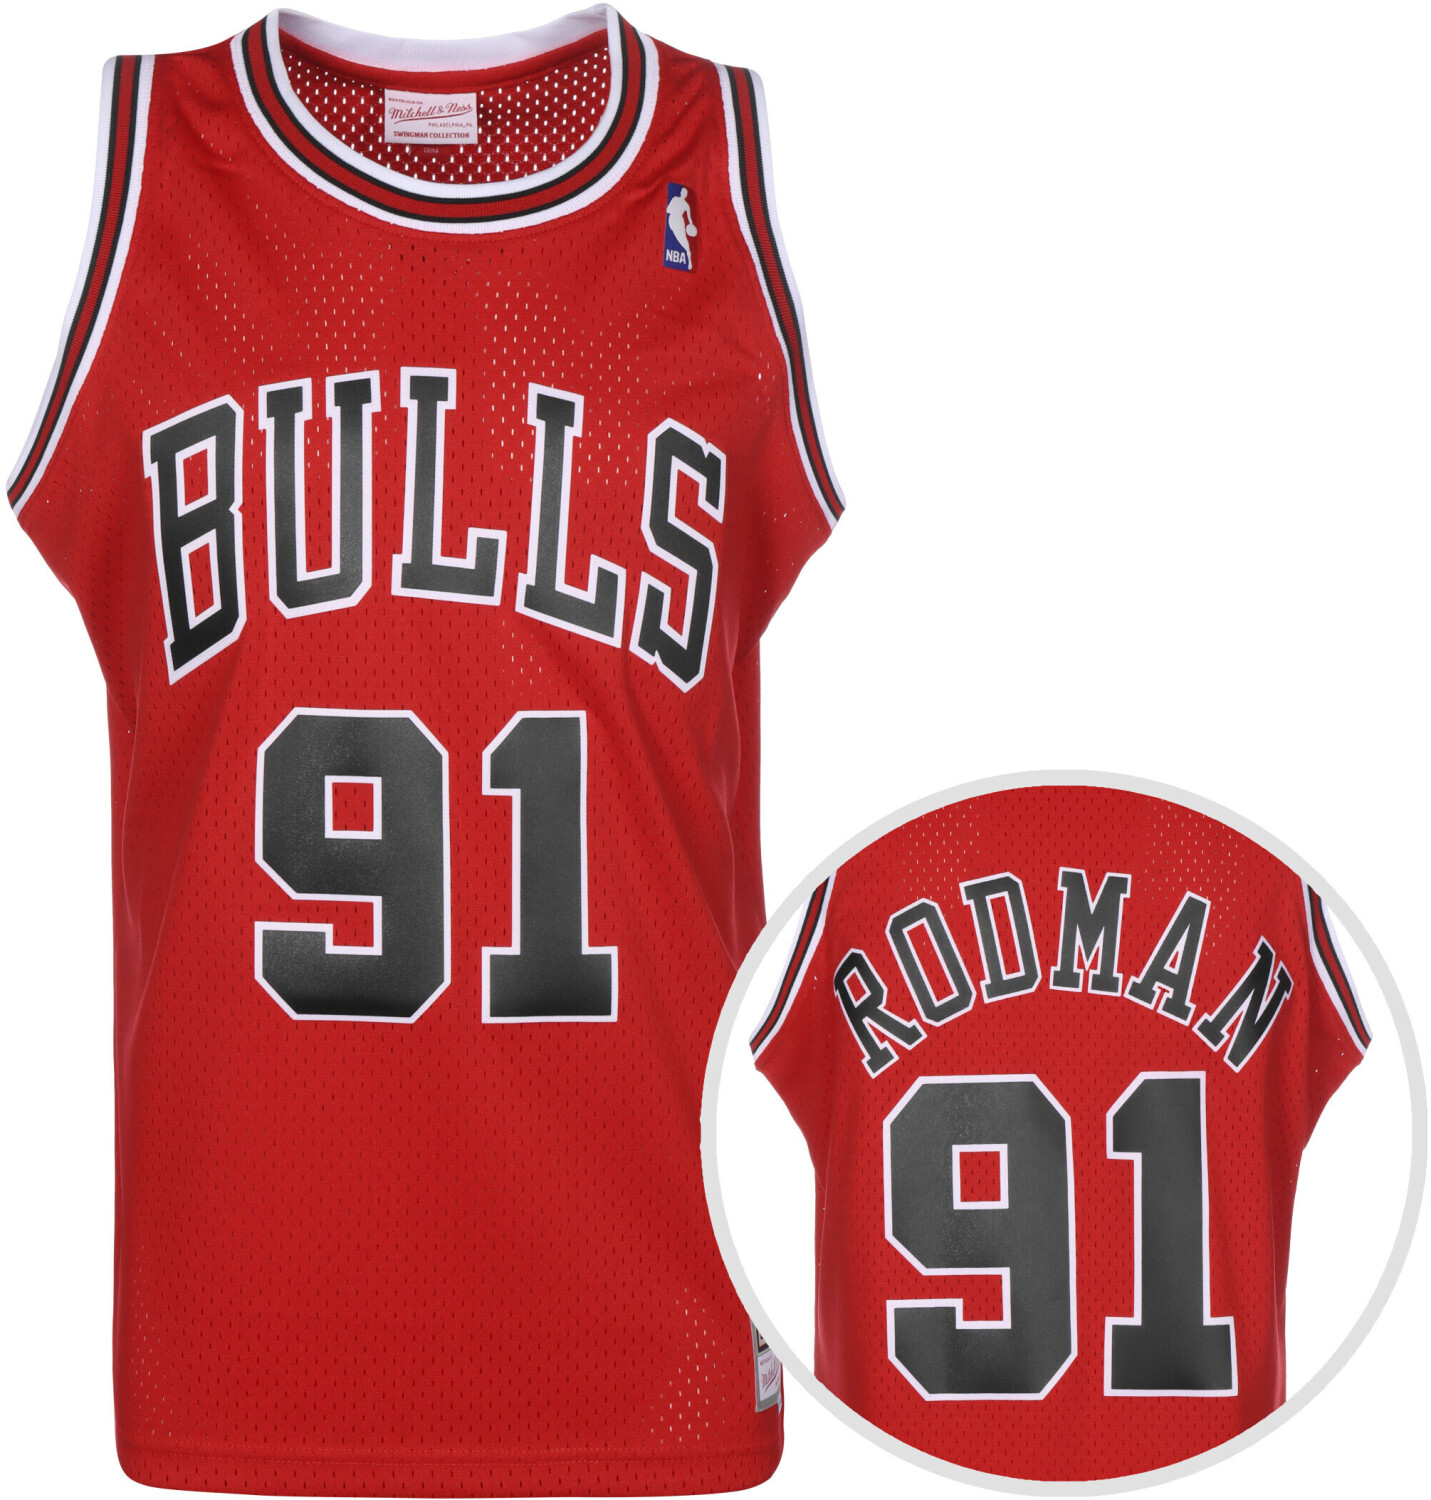 Basketball Trikot Kinder Chicago Bulls 1995-96 Dennis Rodman 91